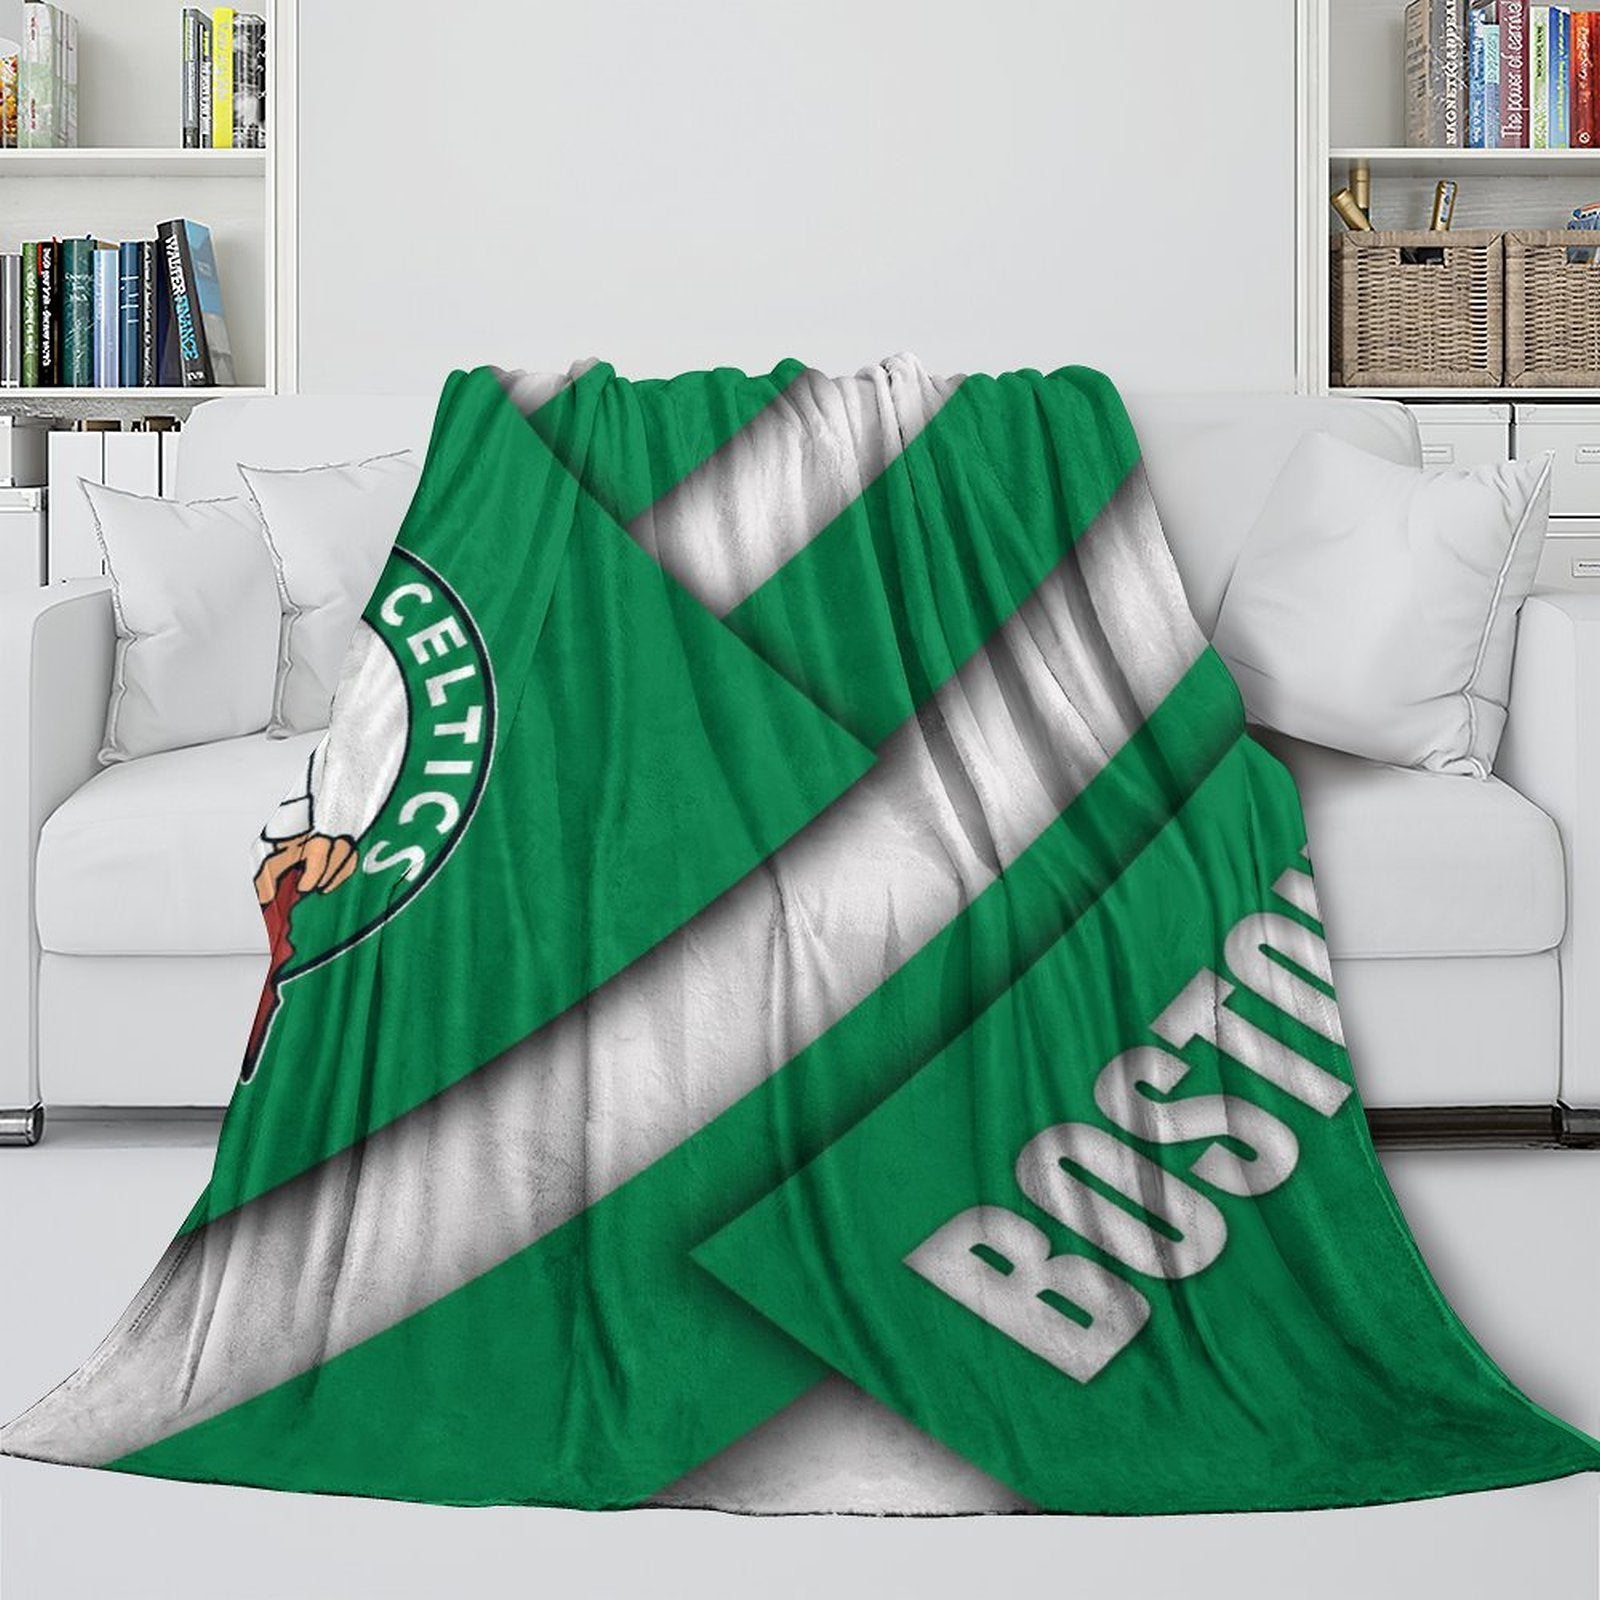 2024 NEW Boston Celtics Blanket Flannel Throw Room Decoration